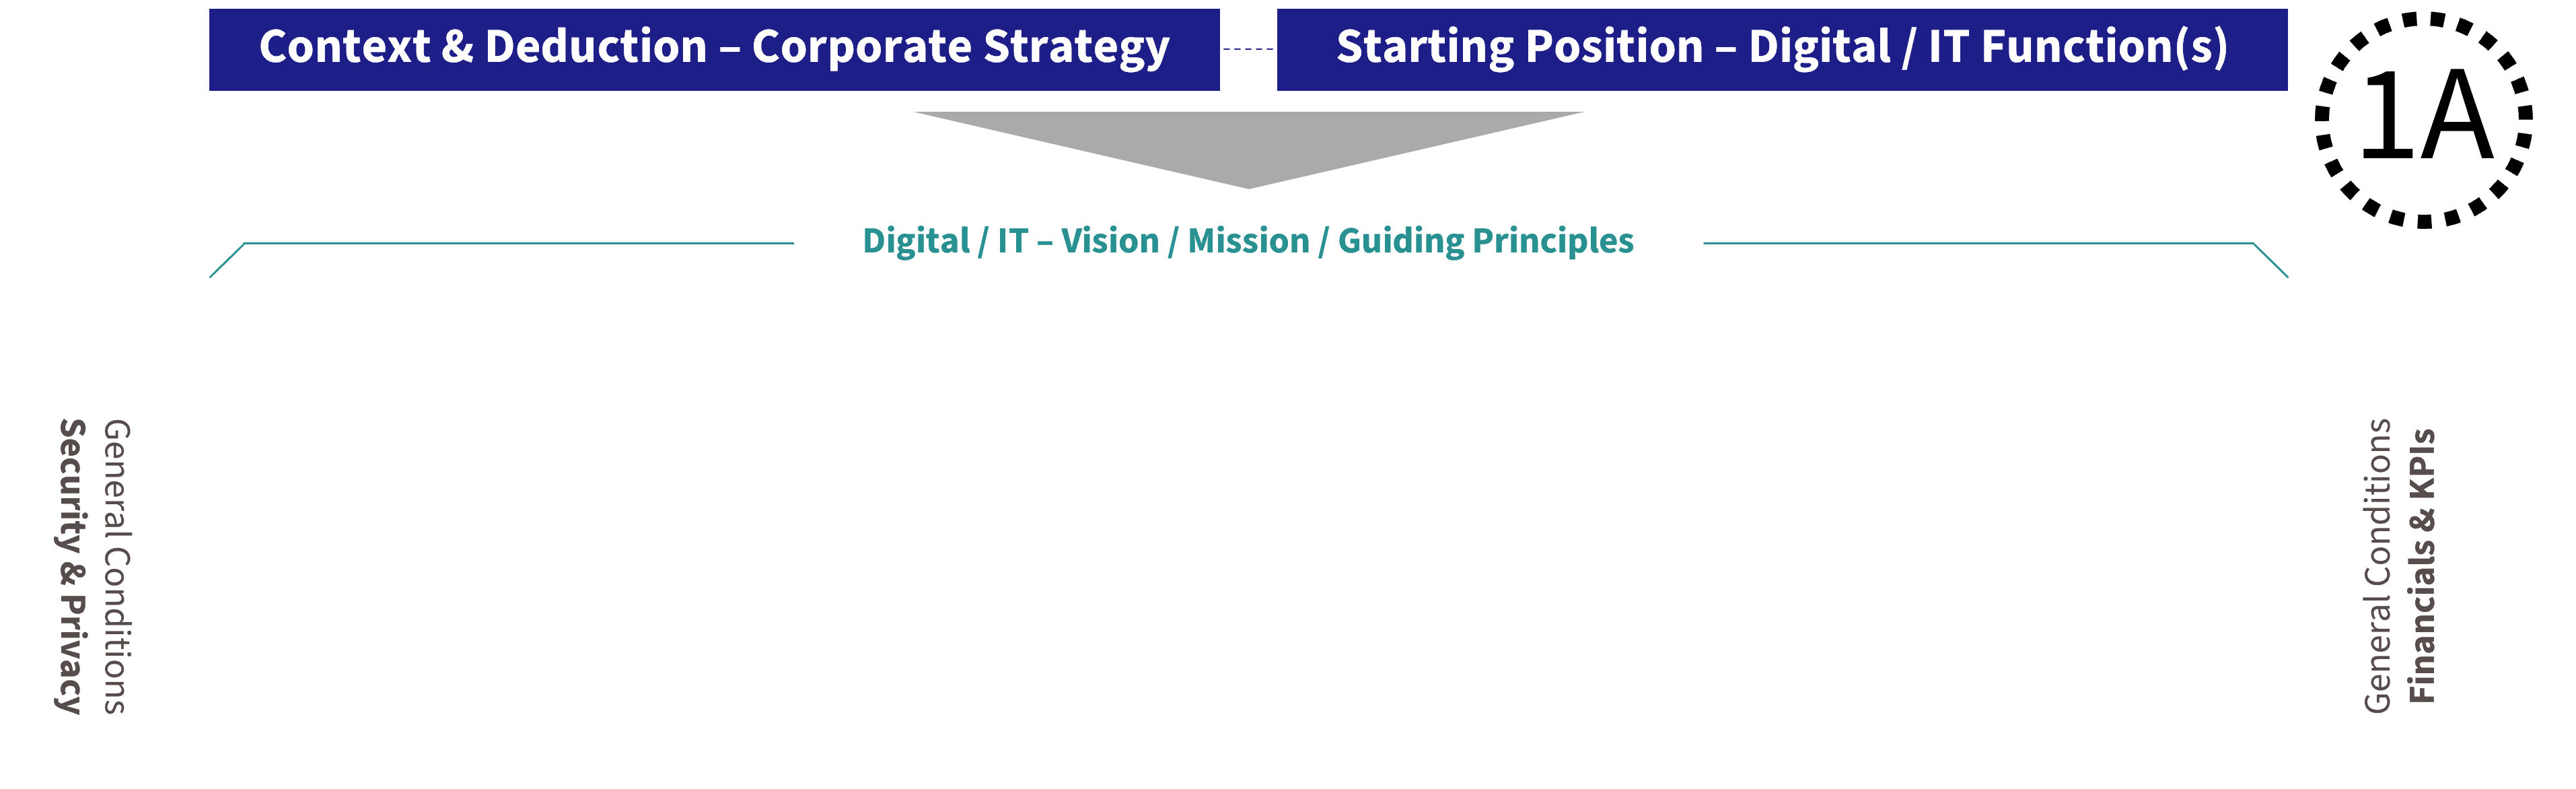 CKC Digital IT Strategy Meta Framework - Phase 1 A - Elements